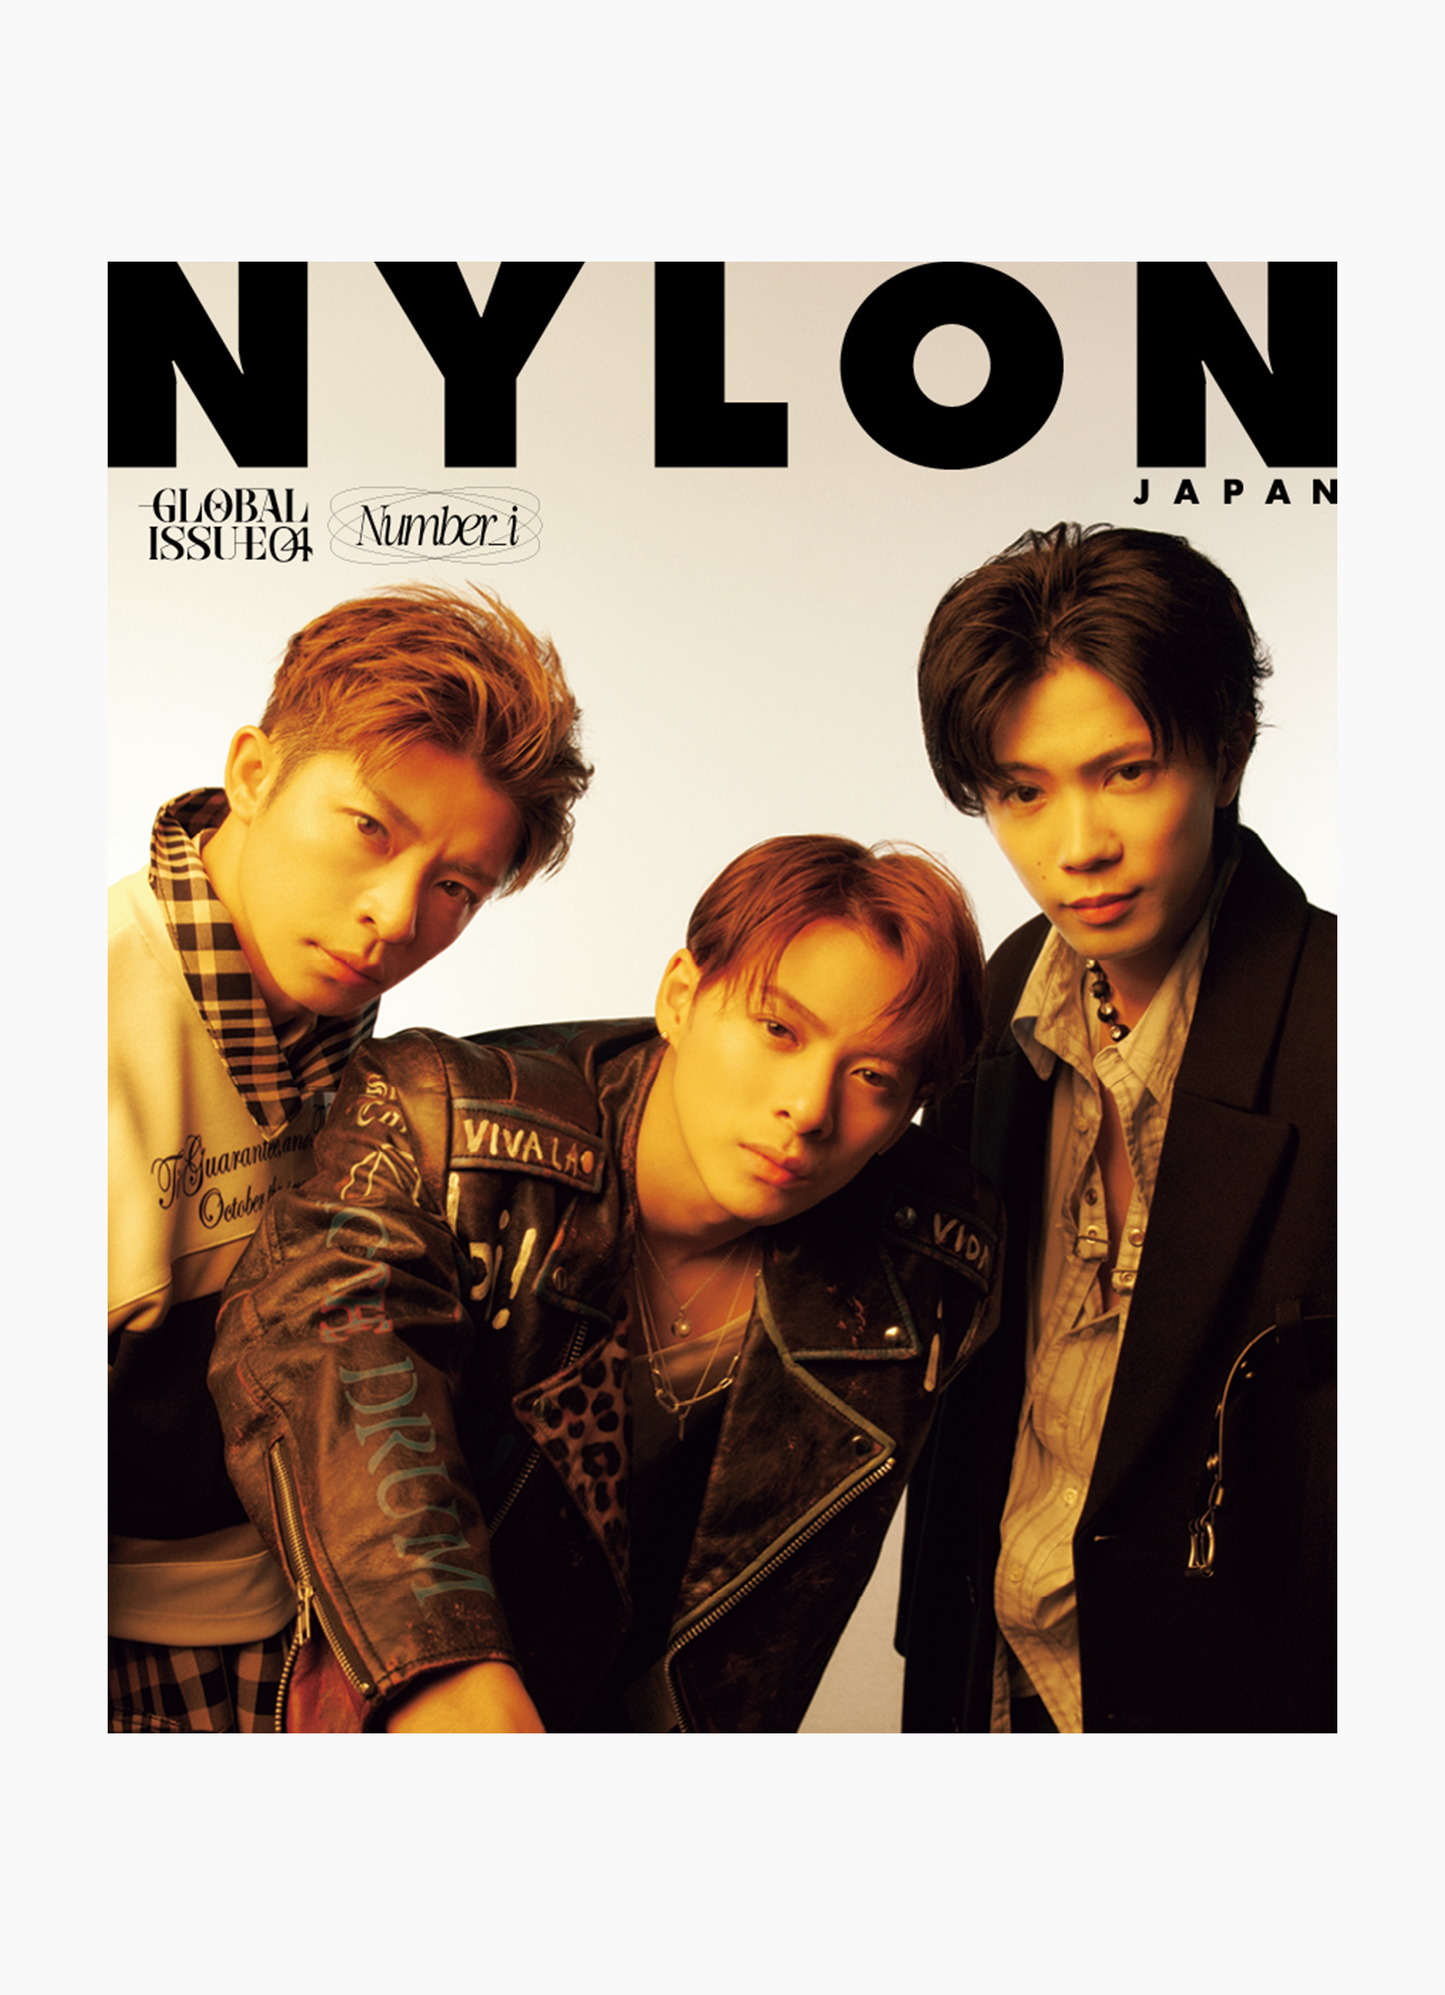 Nylon Japan, Global Issue 4